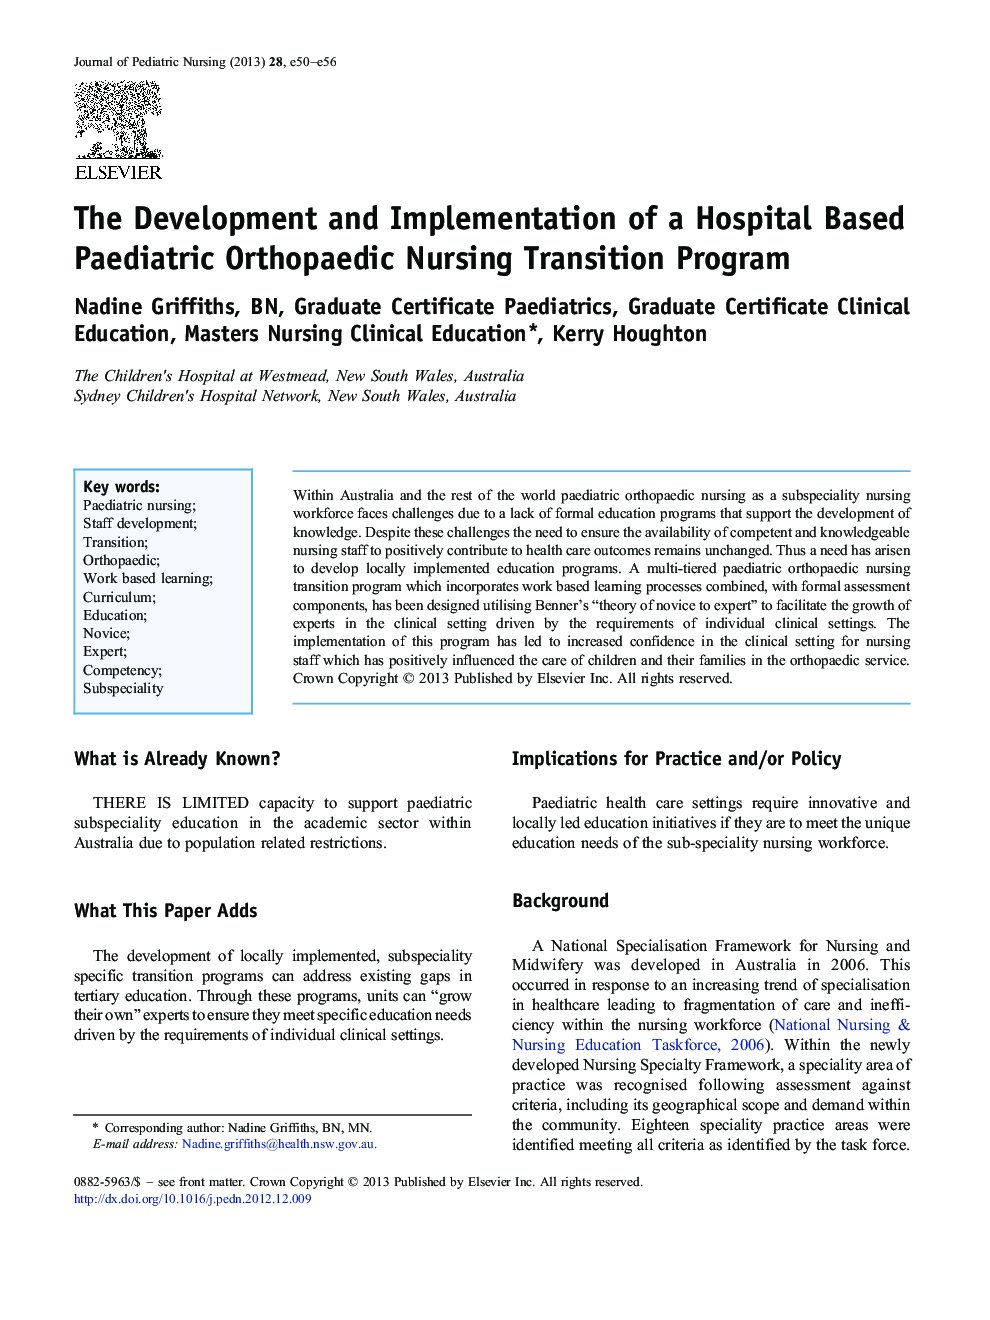 The Development and Implementation of a Hospital Based Paediatric Orthopaedic Nursing Transition Program